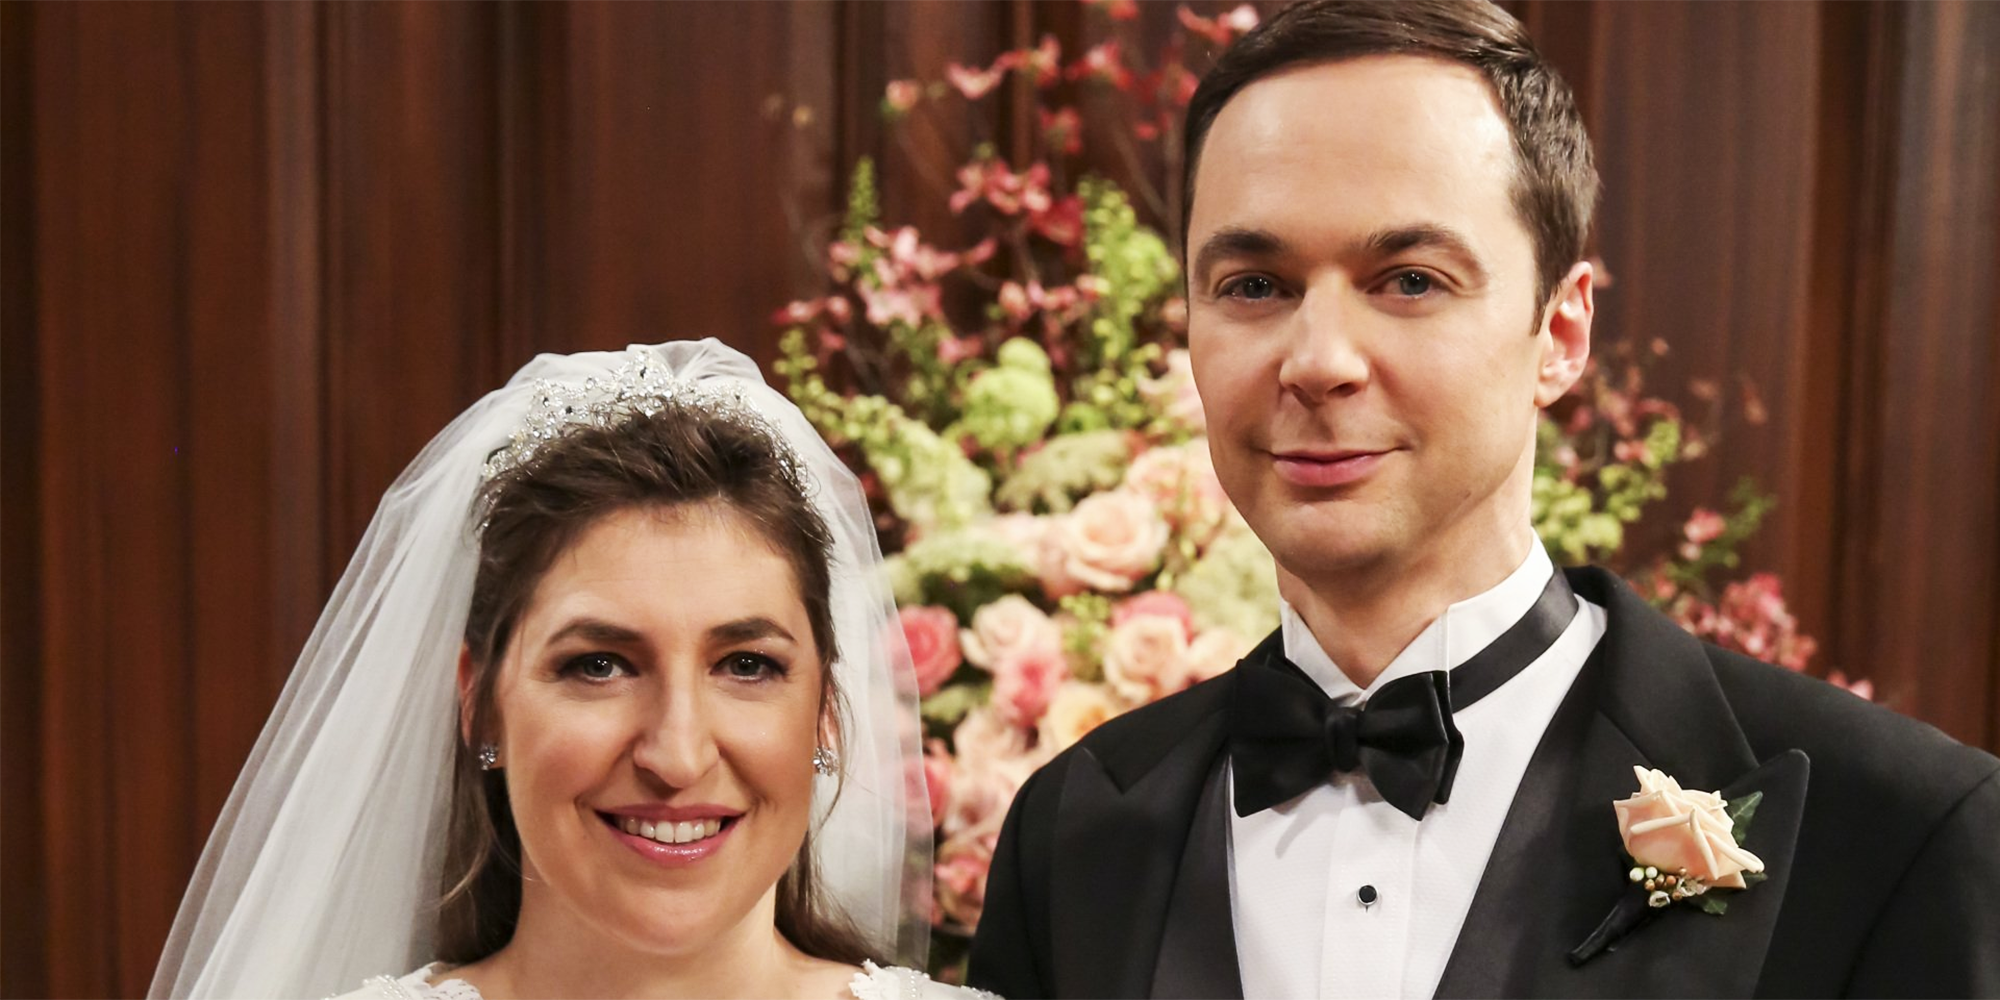 Jim Parsons as Sheldon and Mayim Bialik as Amy in The Big Bang Theory season 11, episode 24 at their wedding